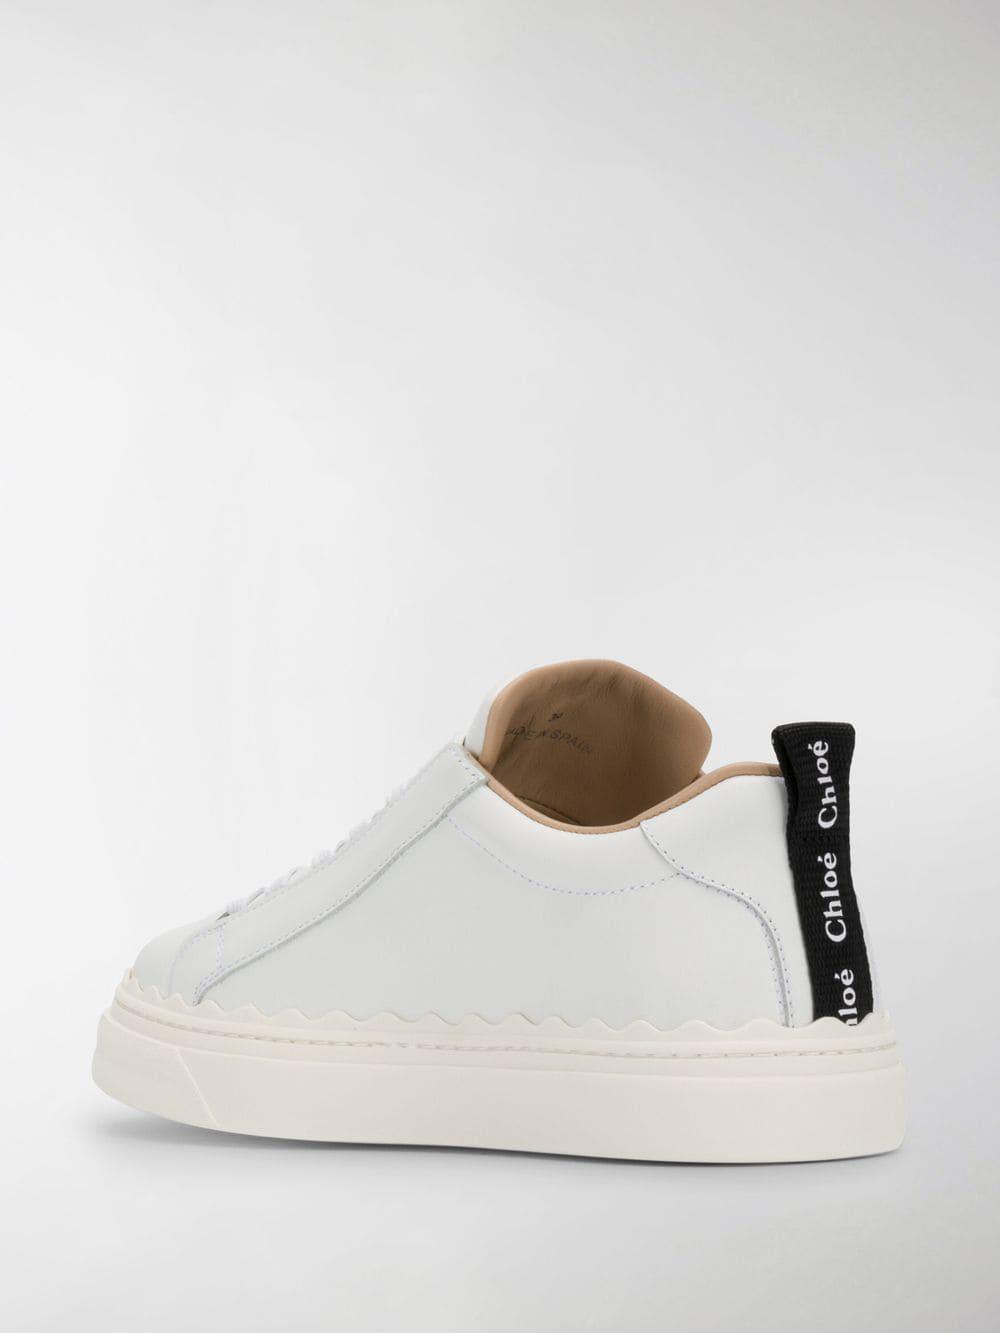 Chloé Lauren Sneakers in White - Lyst